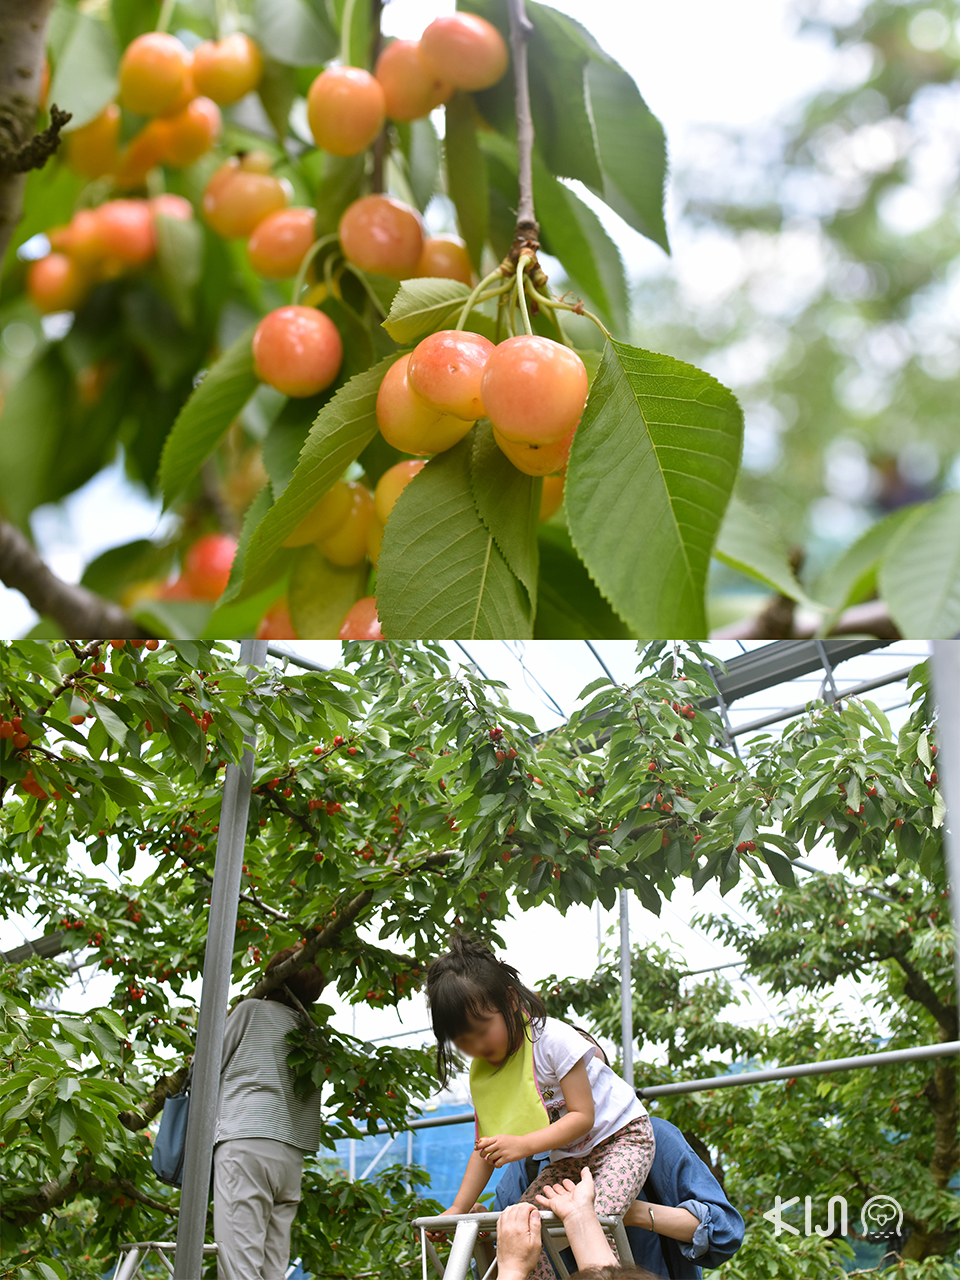 JR East Pass ยามากาตะ ฟุกุชิมะ และ มิยากิ กับที่เที่ยวตามเส้นทางของรถไฟ Toreiyu Tsubasa - เก็บเชอร์รี่สดๆ จากต้นที่ Ohsyo Fruits Farm ในเมือง Tendo